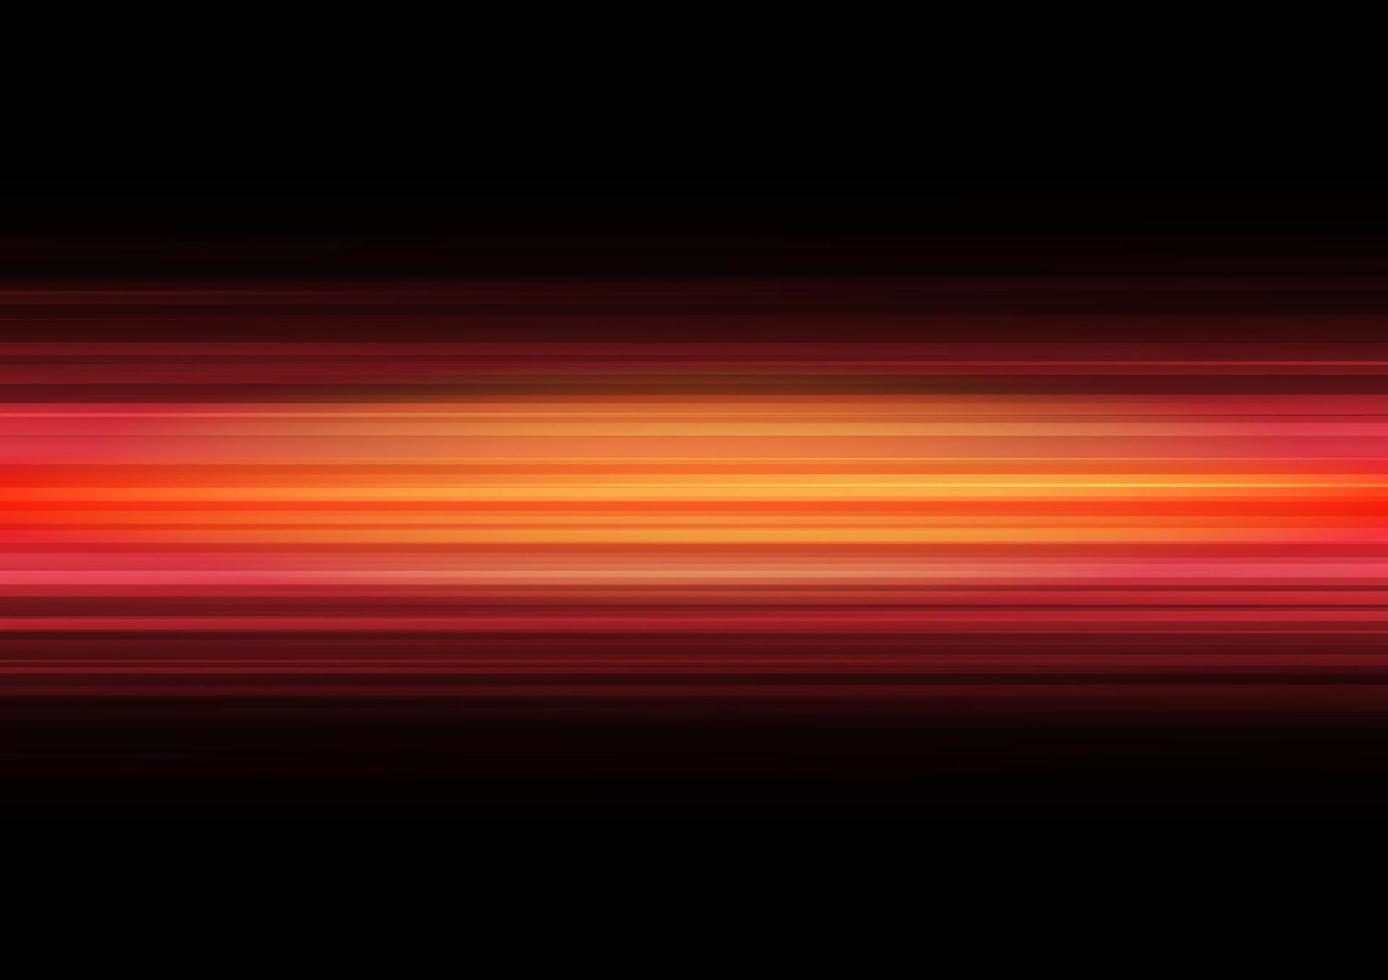 abstrakt modern linje hastighet ljuseffekt på svart bakgrund vektorillustration. vektor